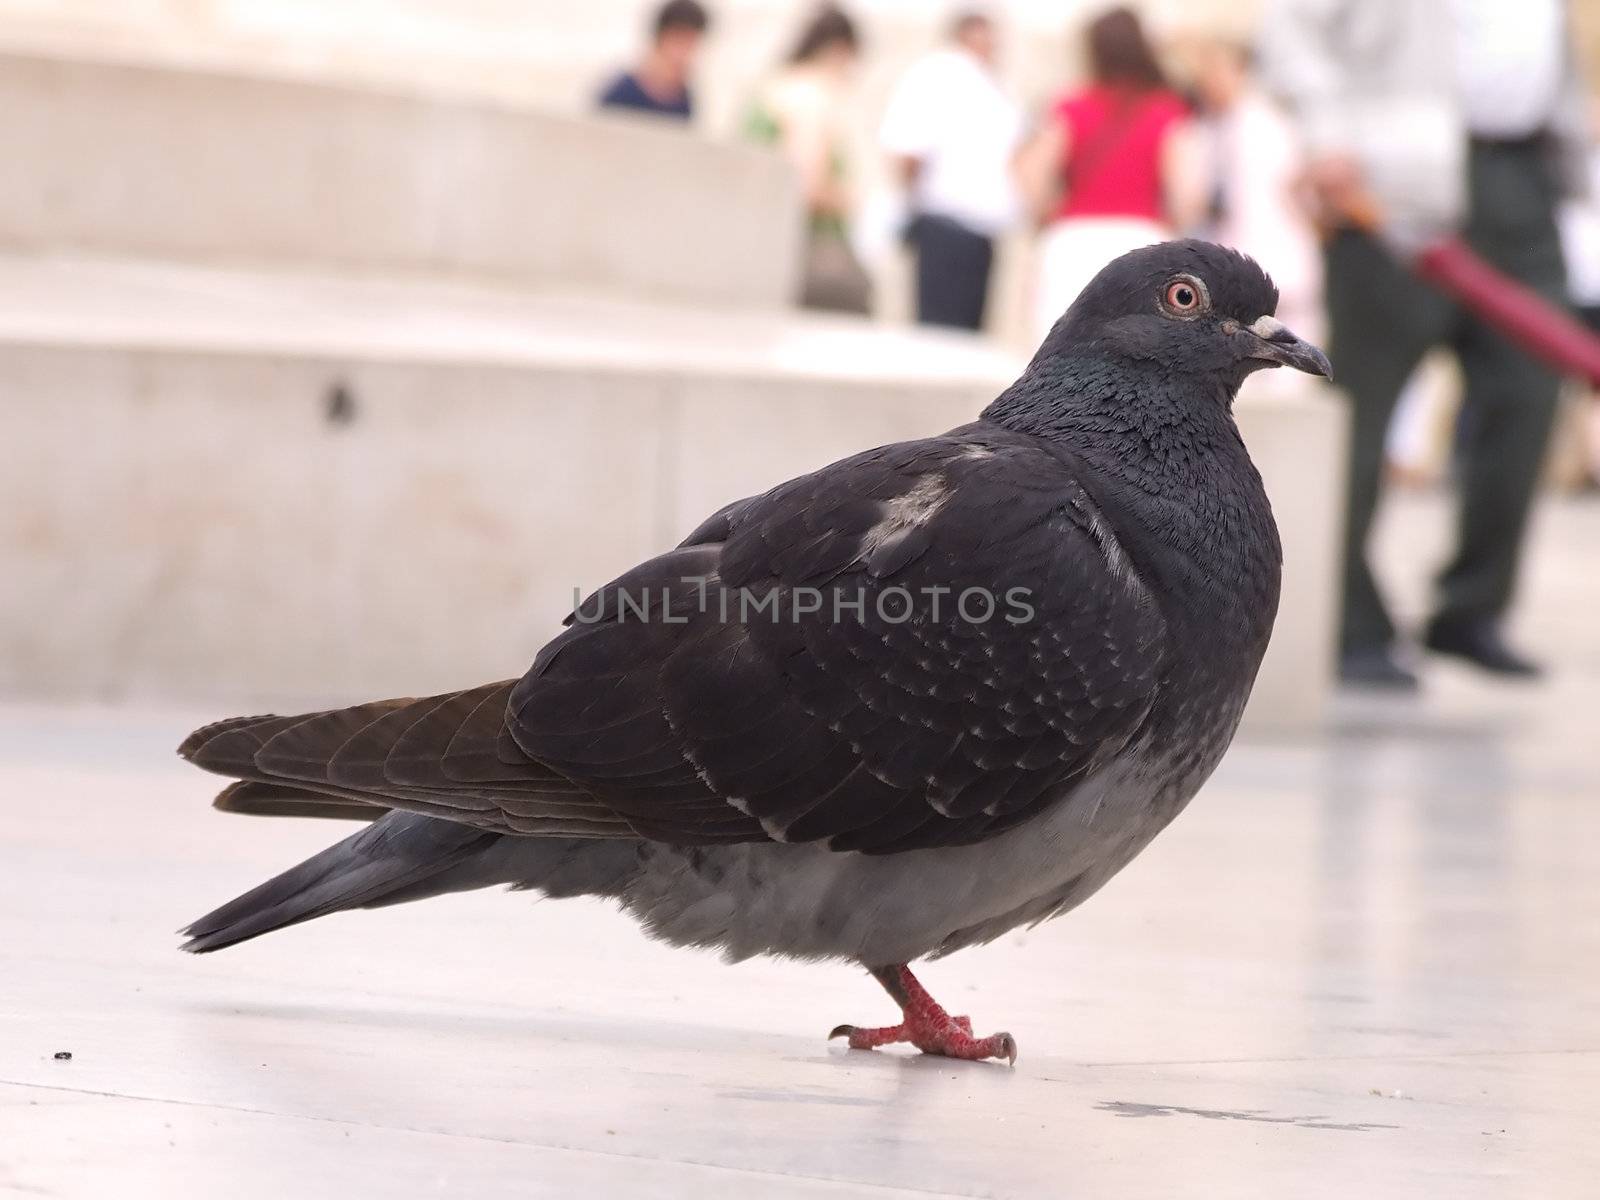 City pigeon by PauloResende